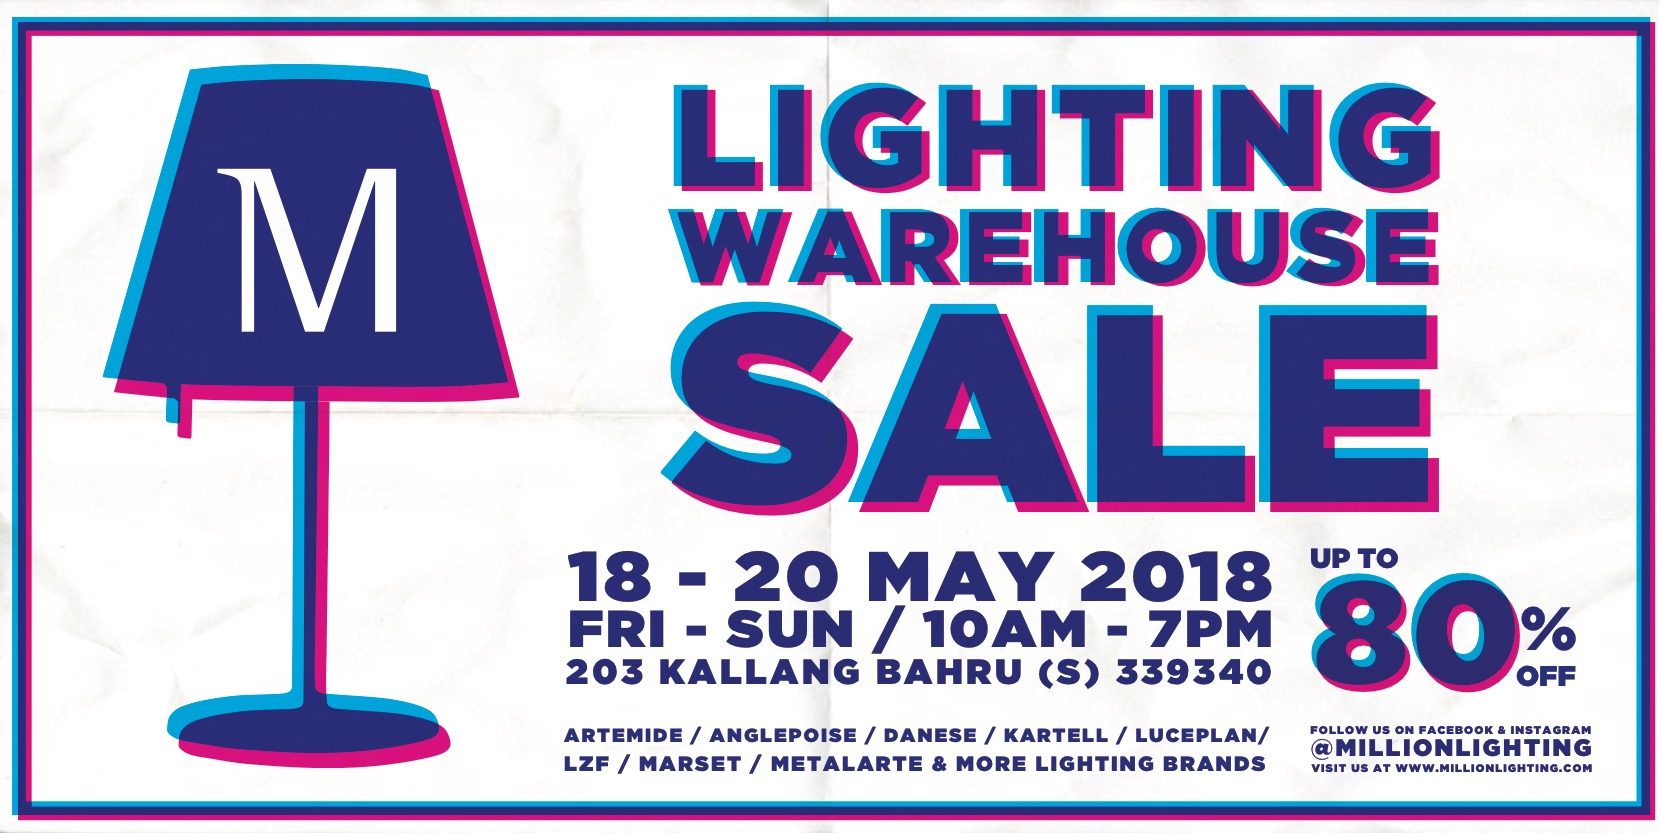 Enjoy massive savings, up to 80%, with Million Lighting Warehouse Sale!